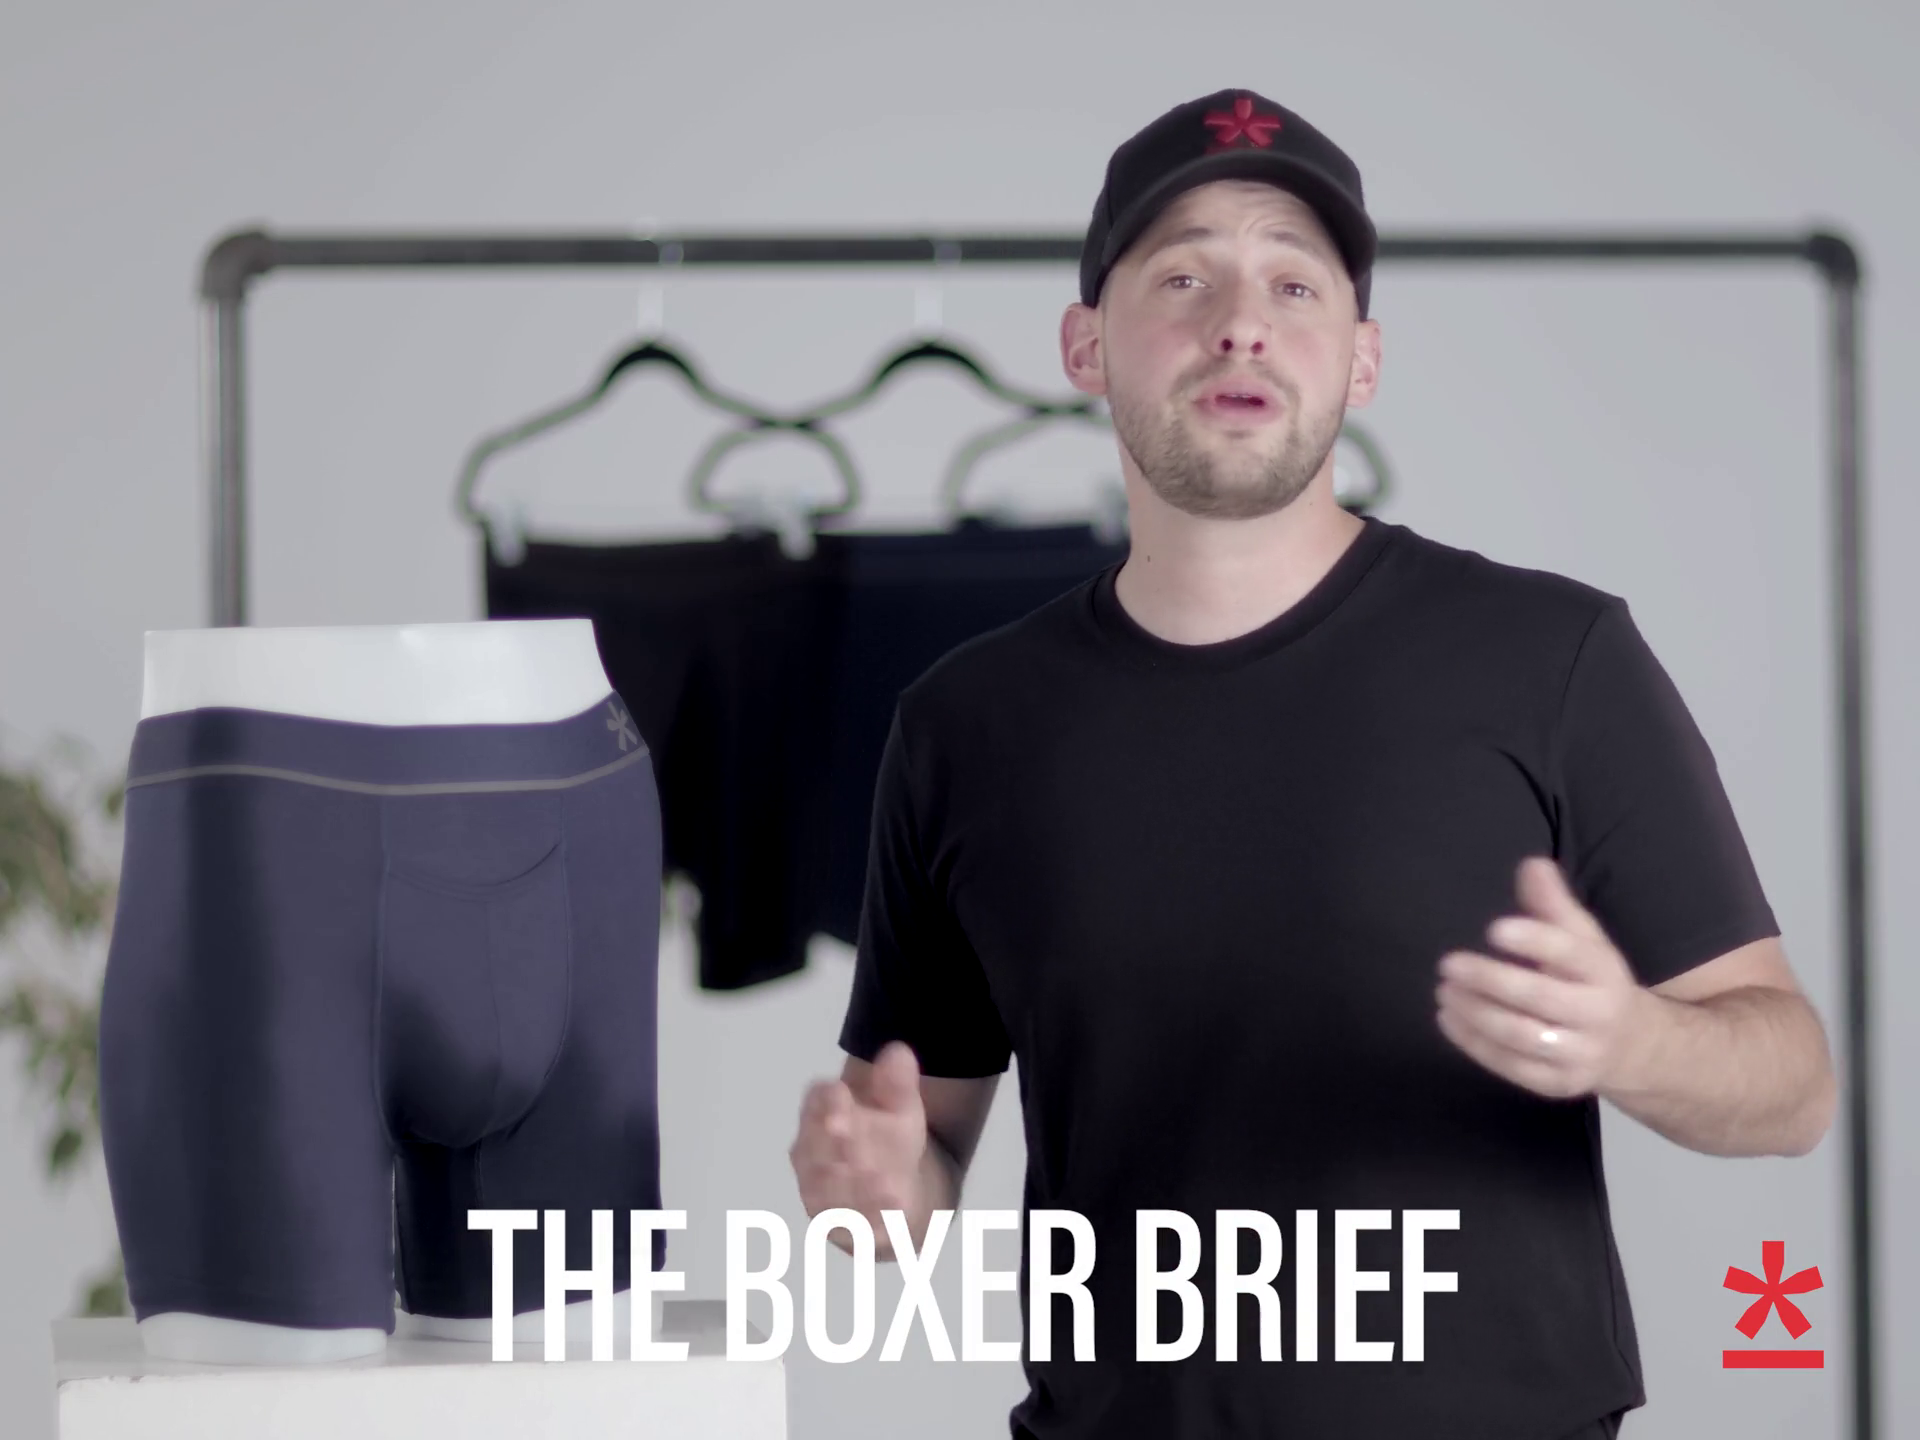 Load video: Video describing the boxer brief features